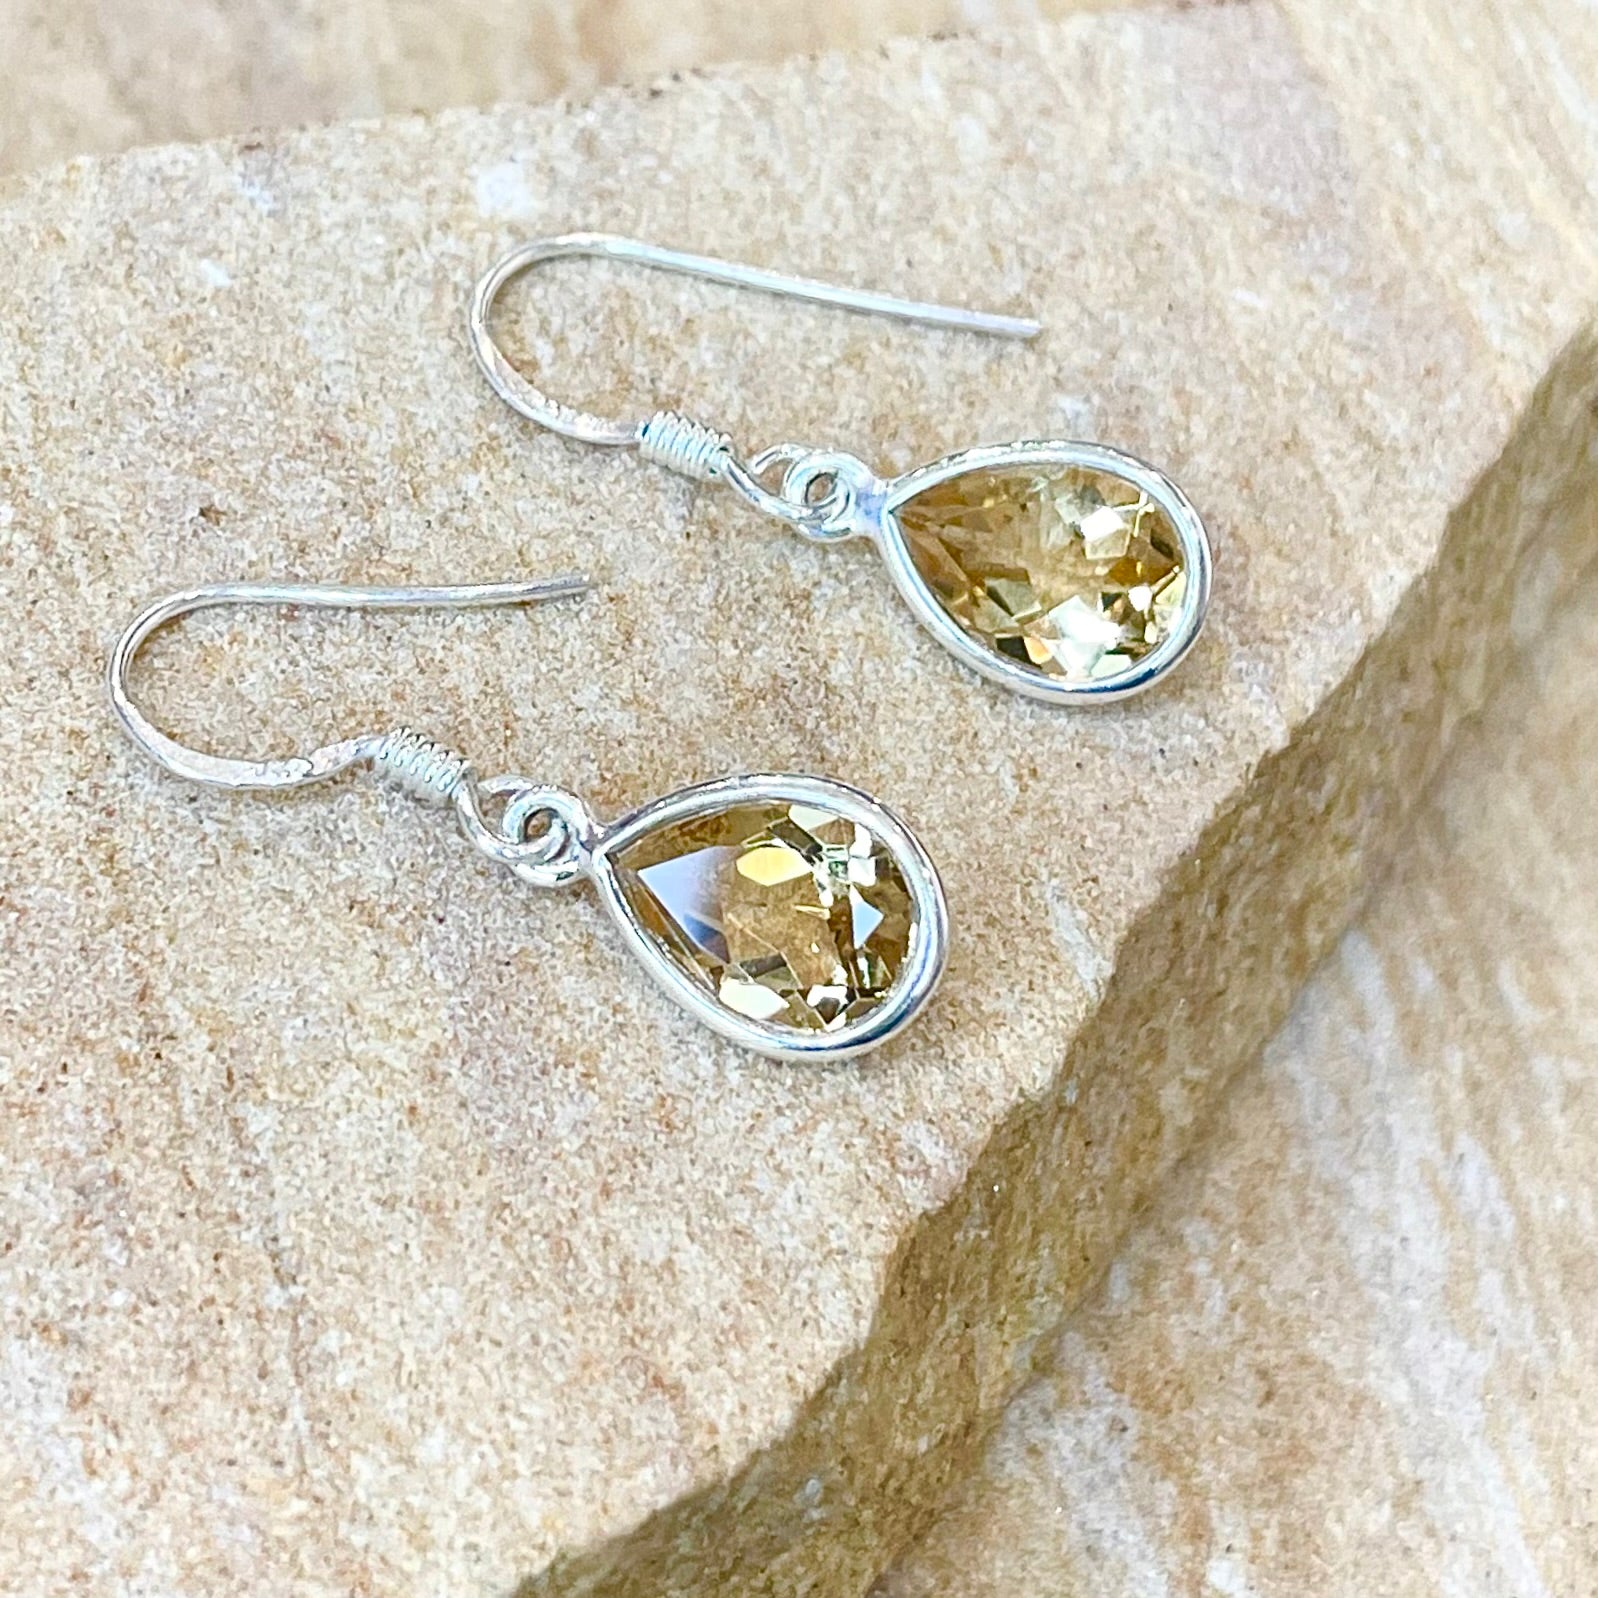 Faceted citrine pear shape silver earrings